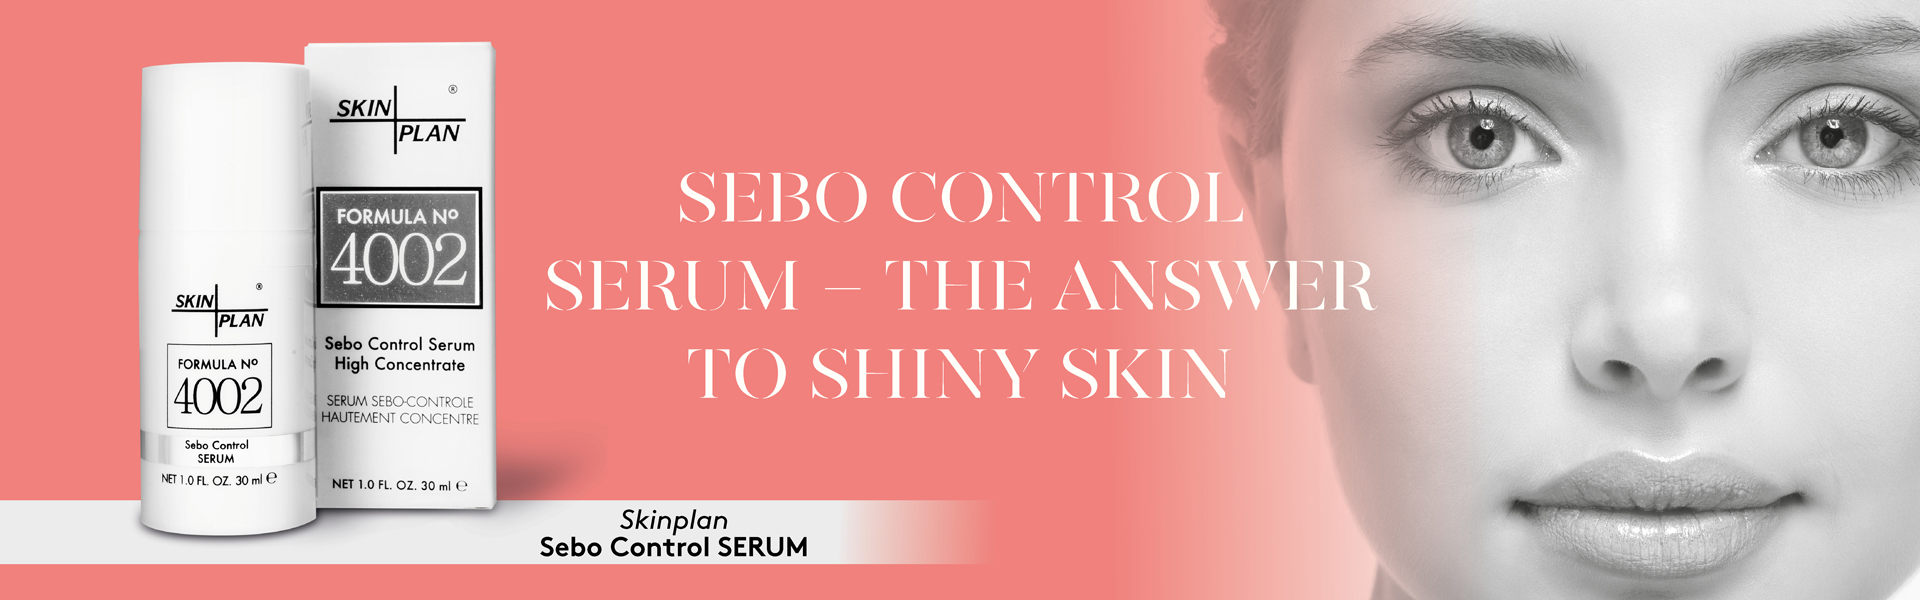 Sebo Control Serum – the answer to shiny skin